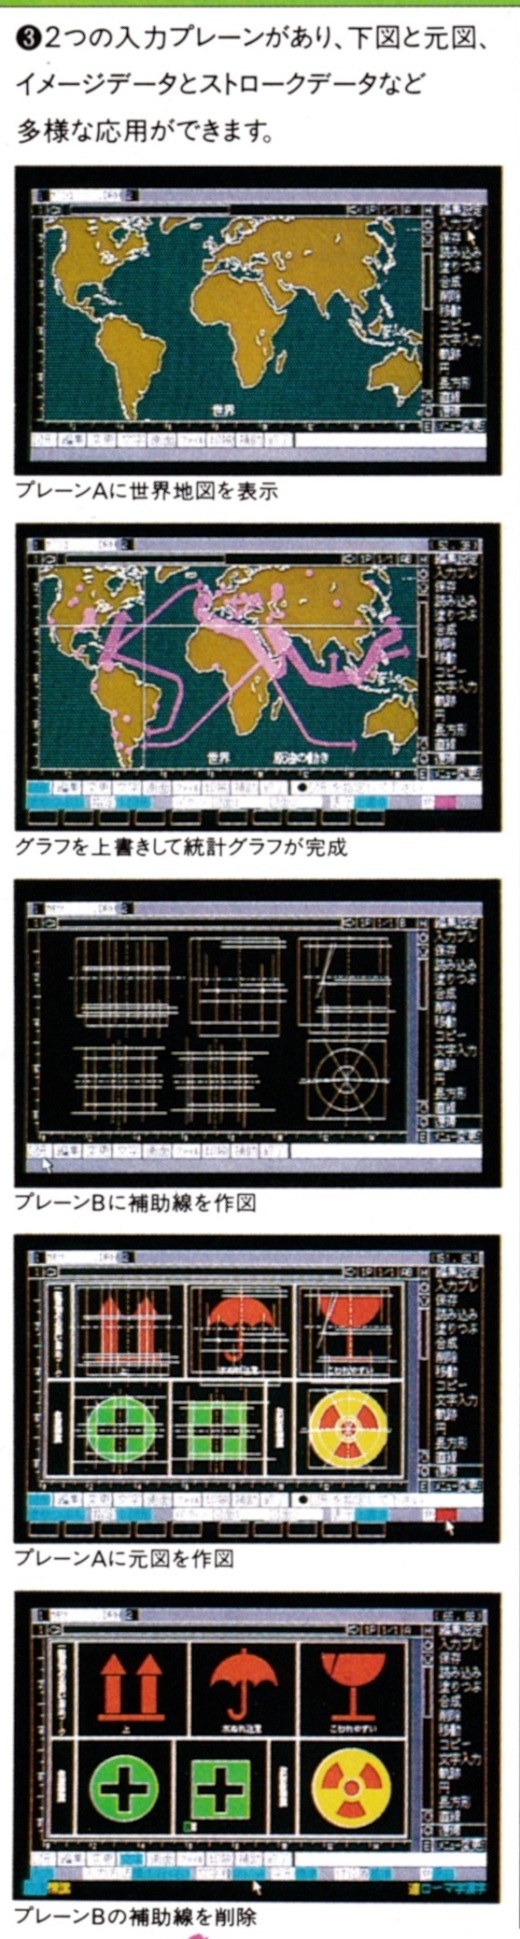 ASCII1987(04)a17花子説明05_W520.jpg